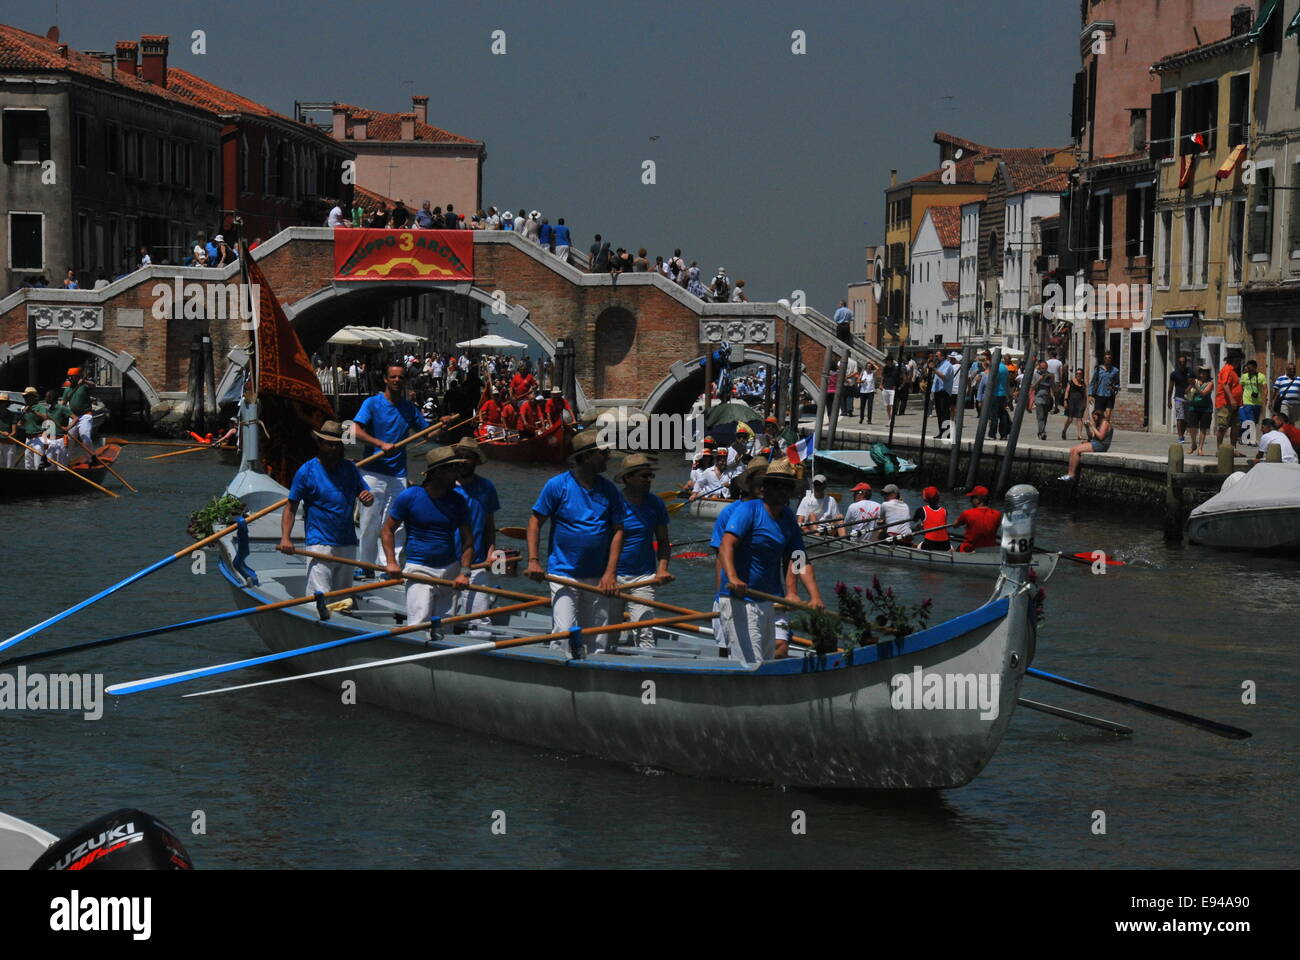 Italien. Venedig. Vogalonga 2014. Große und Kanus. Ruder. Warteschlange unter Brücke bekommen. Chaos. Blick durch die Brücke. Ruderer. Stockfoto